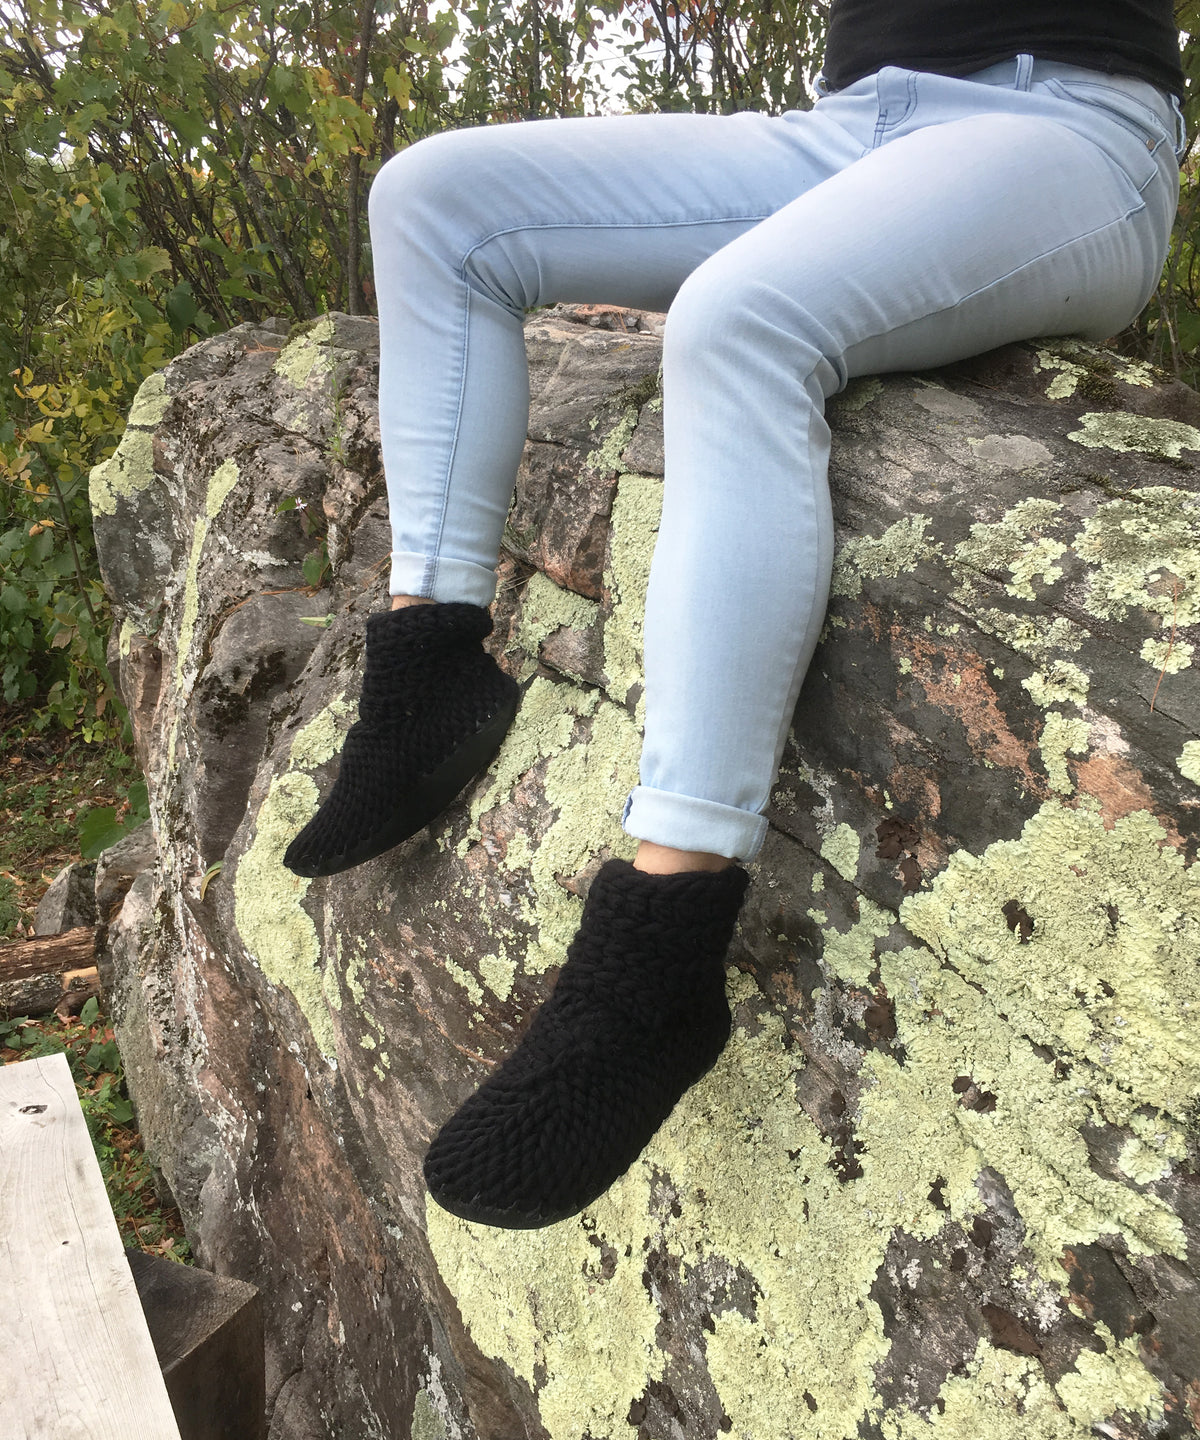 Eco Friendly Merino Wool Work Slipper Socks with Red Stripe - Muffle-Up!